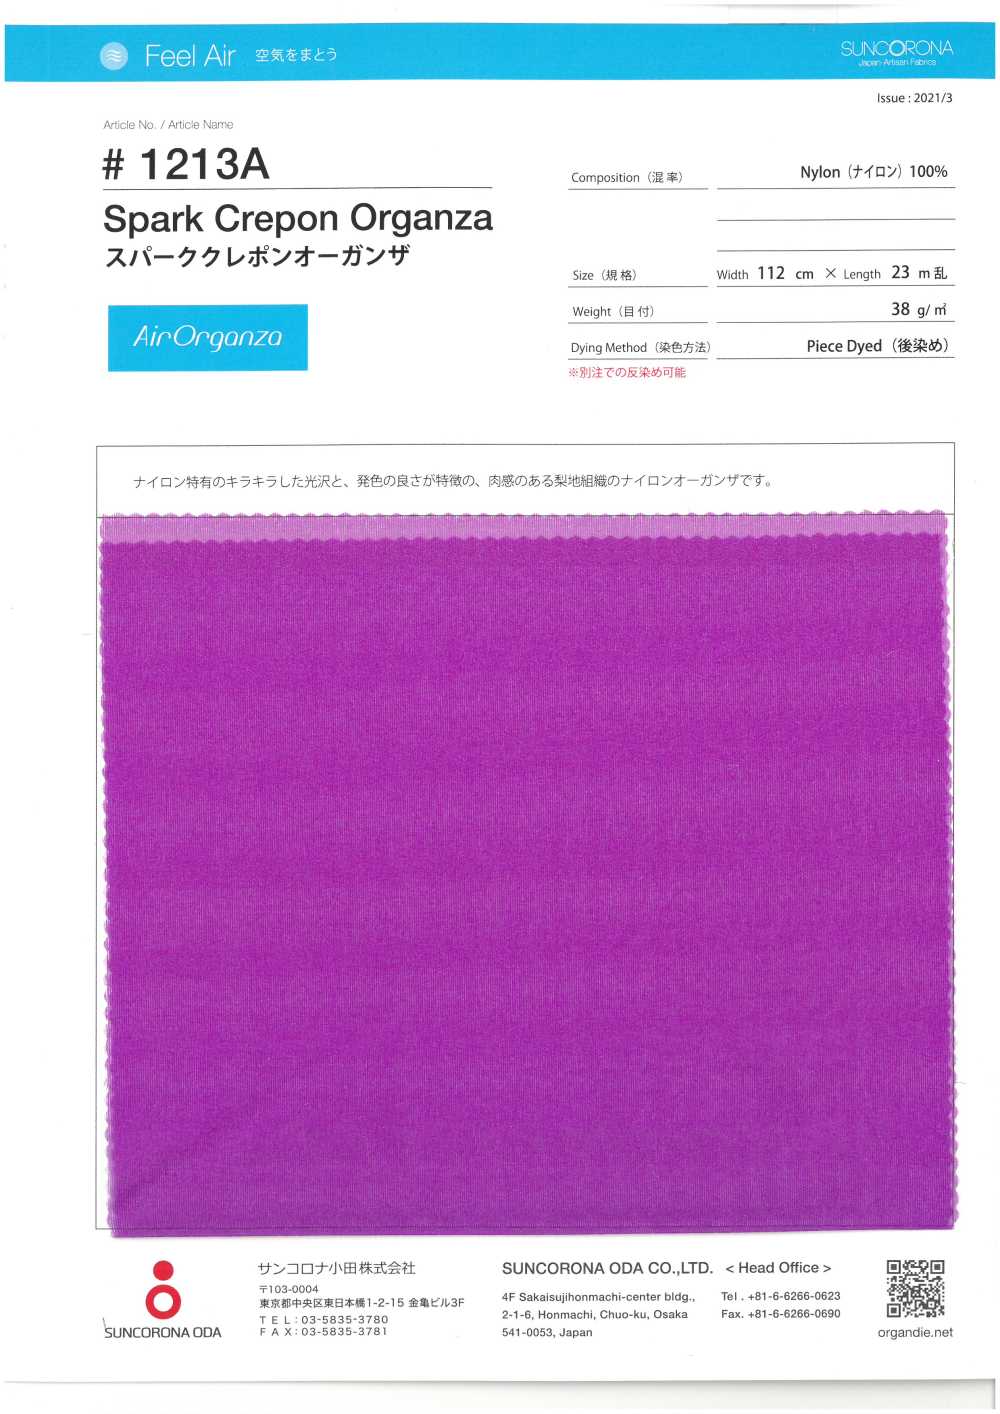 1213A Spark Klepon Organza[Textilgewebe] Suncorona Oda